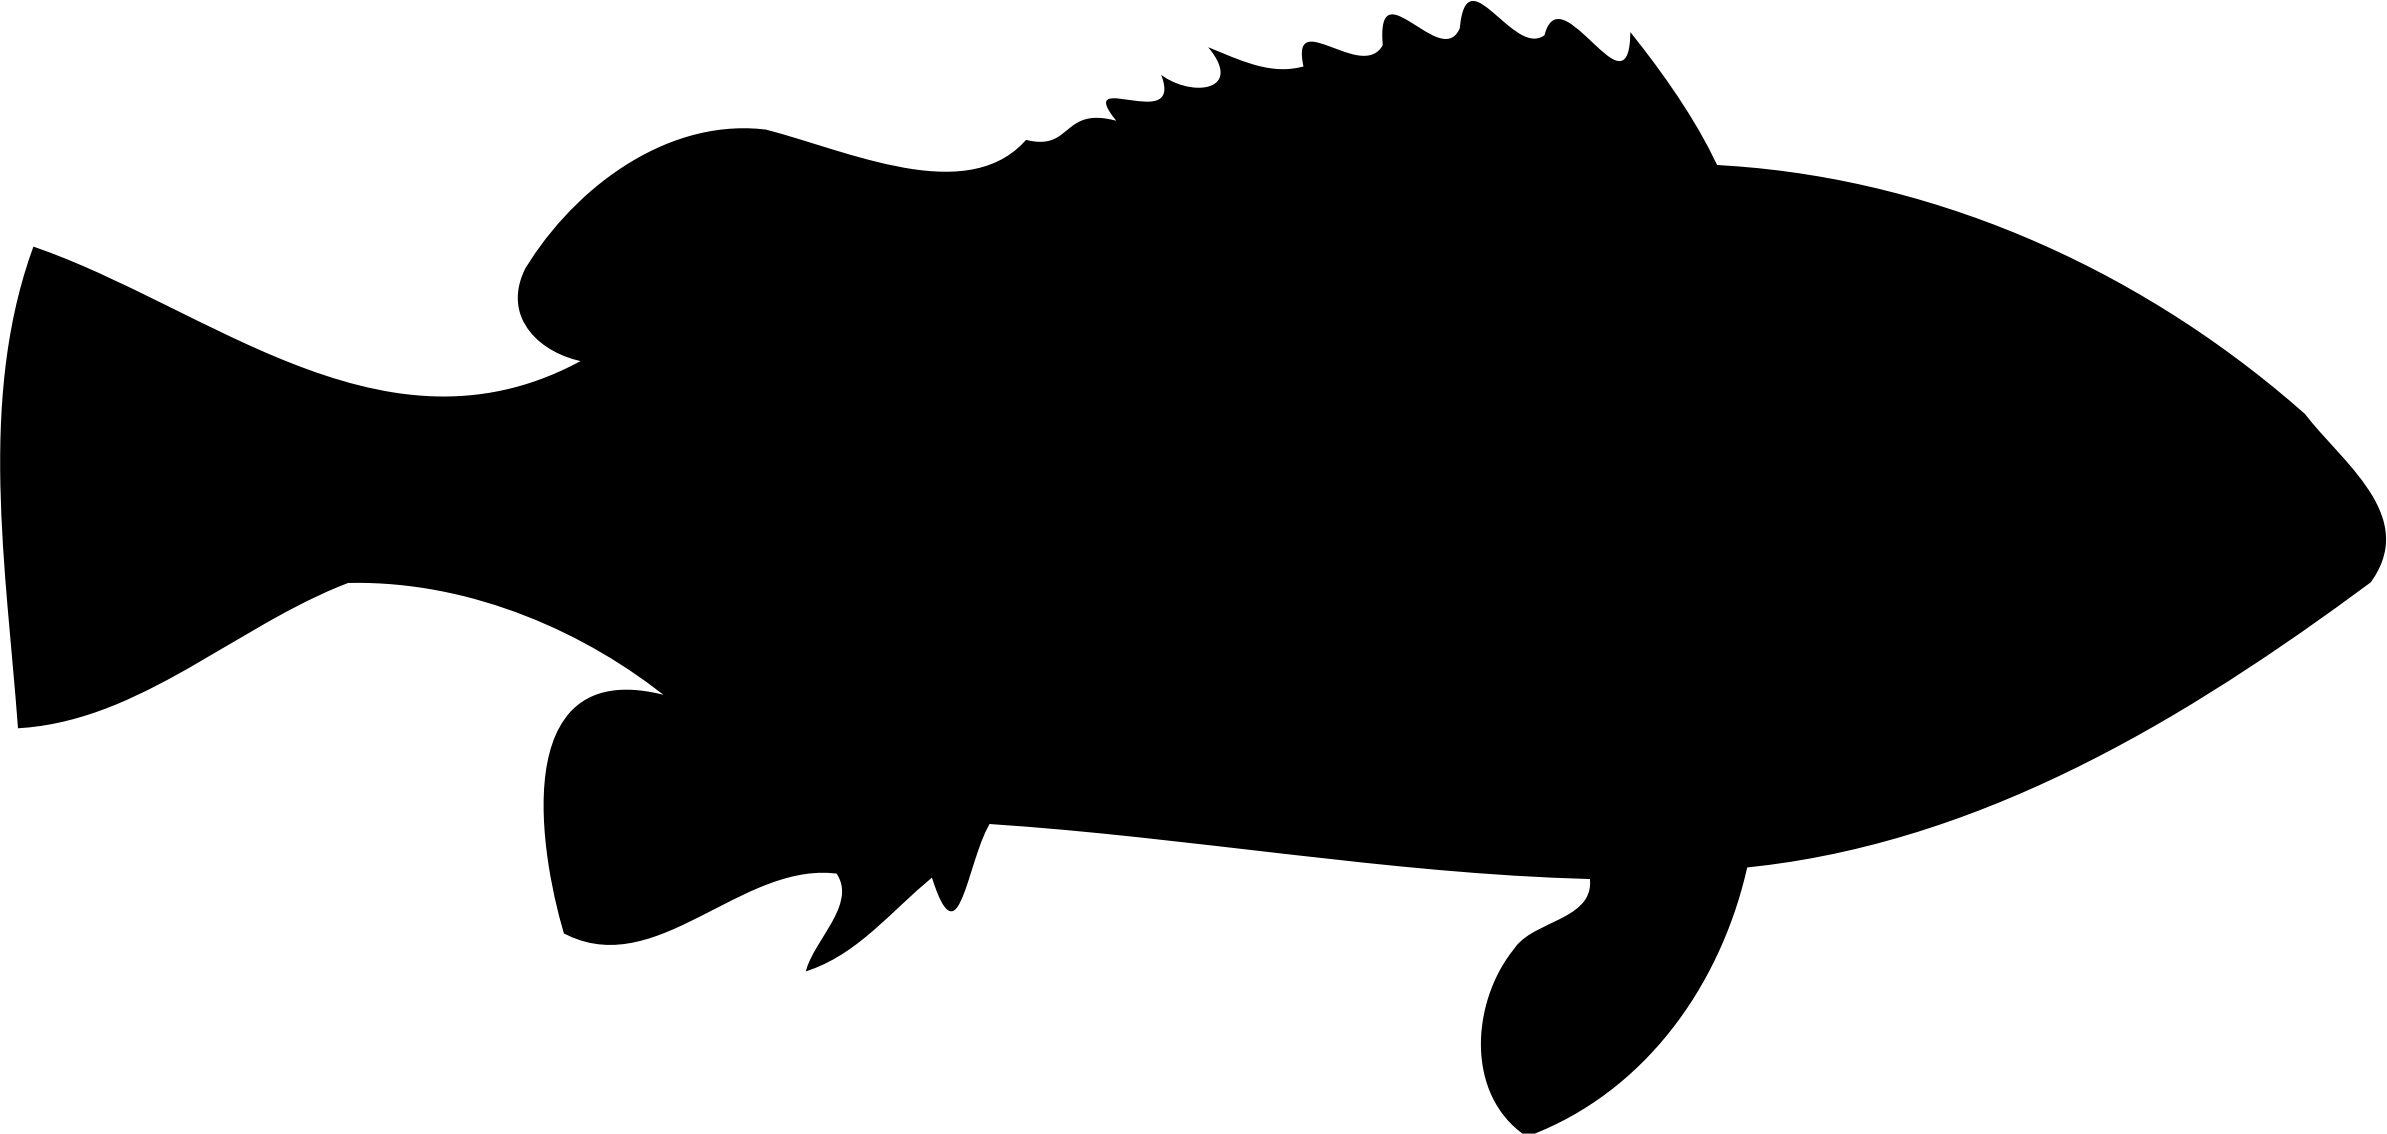 Eastern Wirrah - Animal Silhouette (2387x1134)